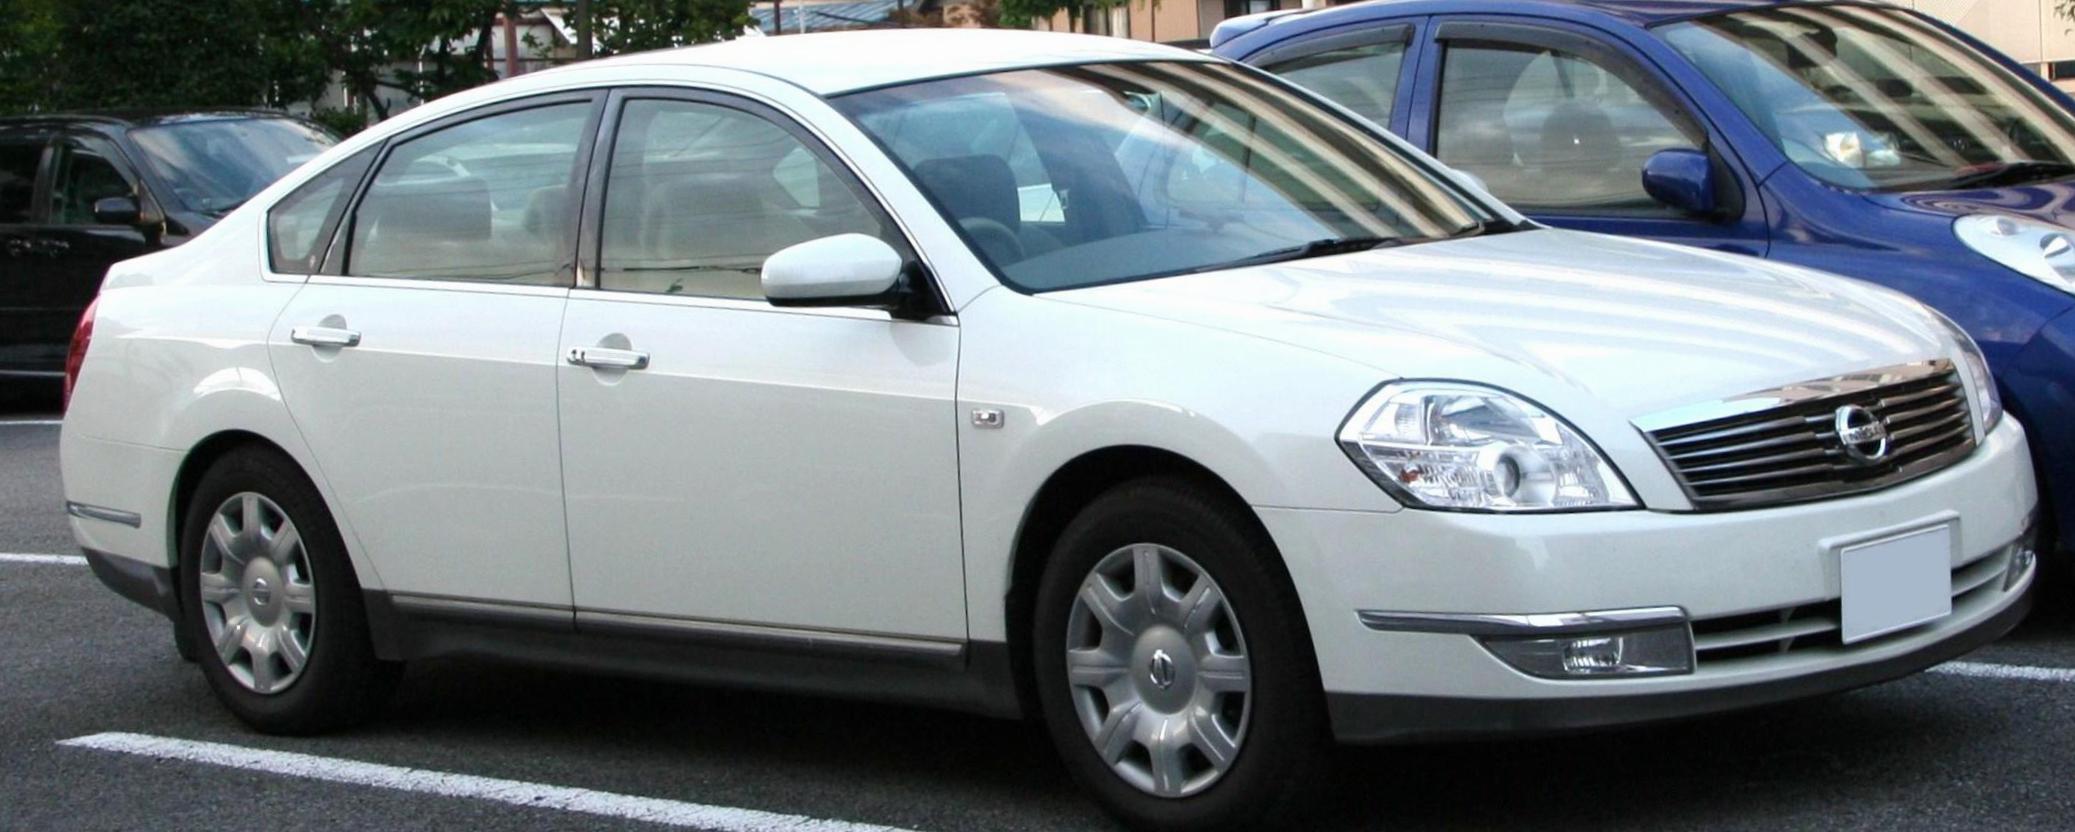 Nissan Teana review 2008